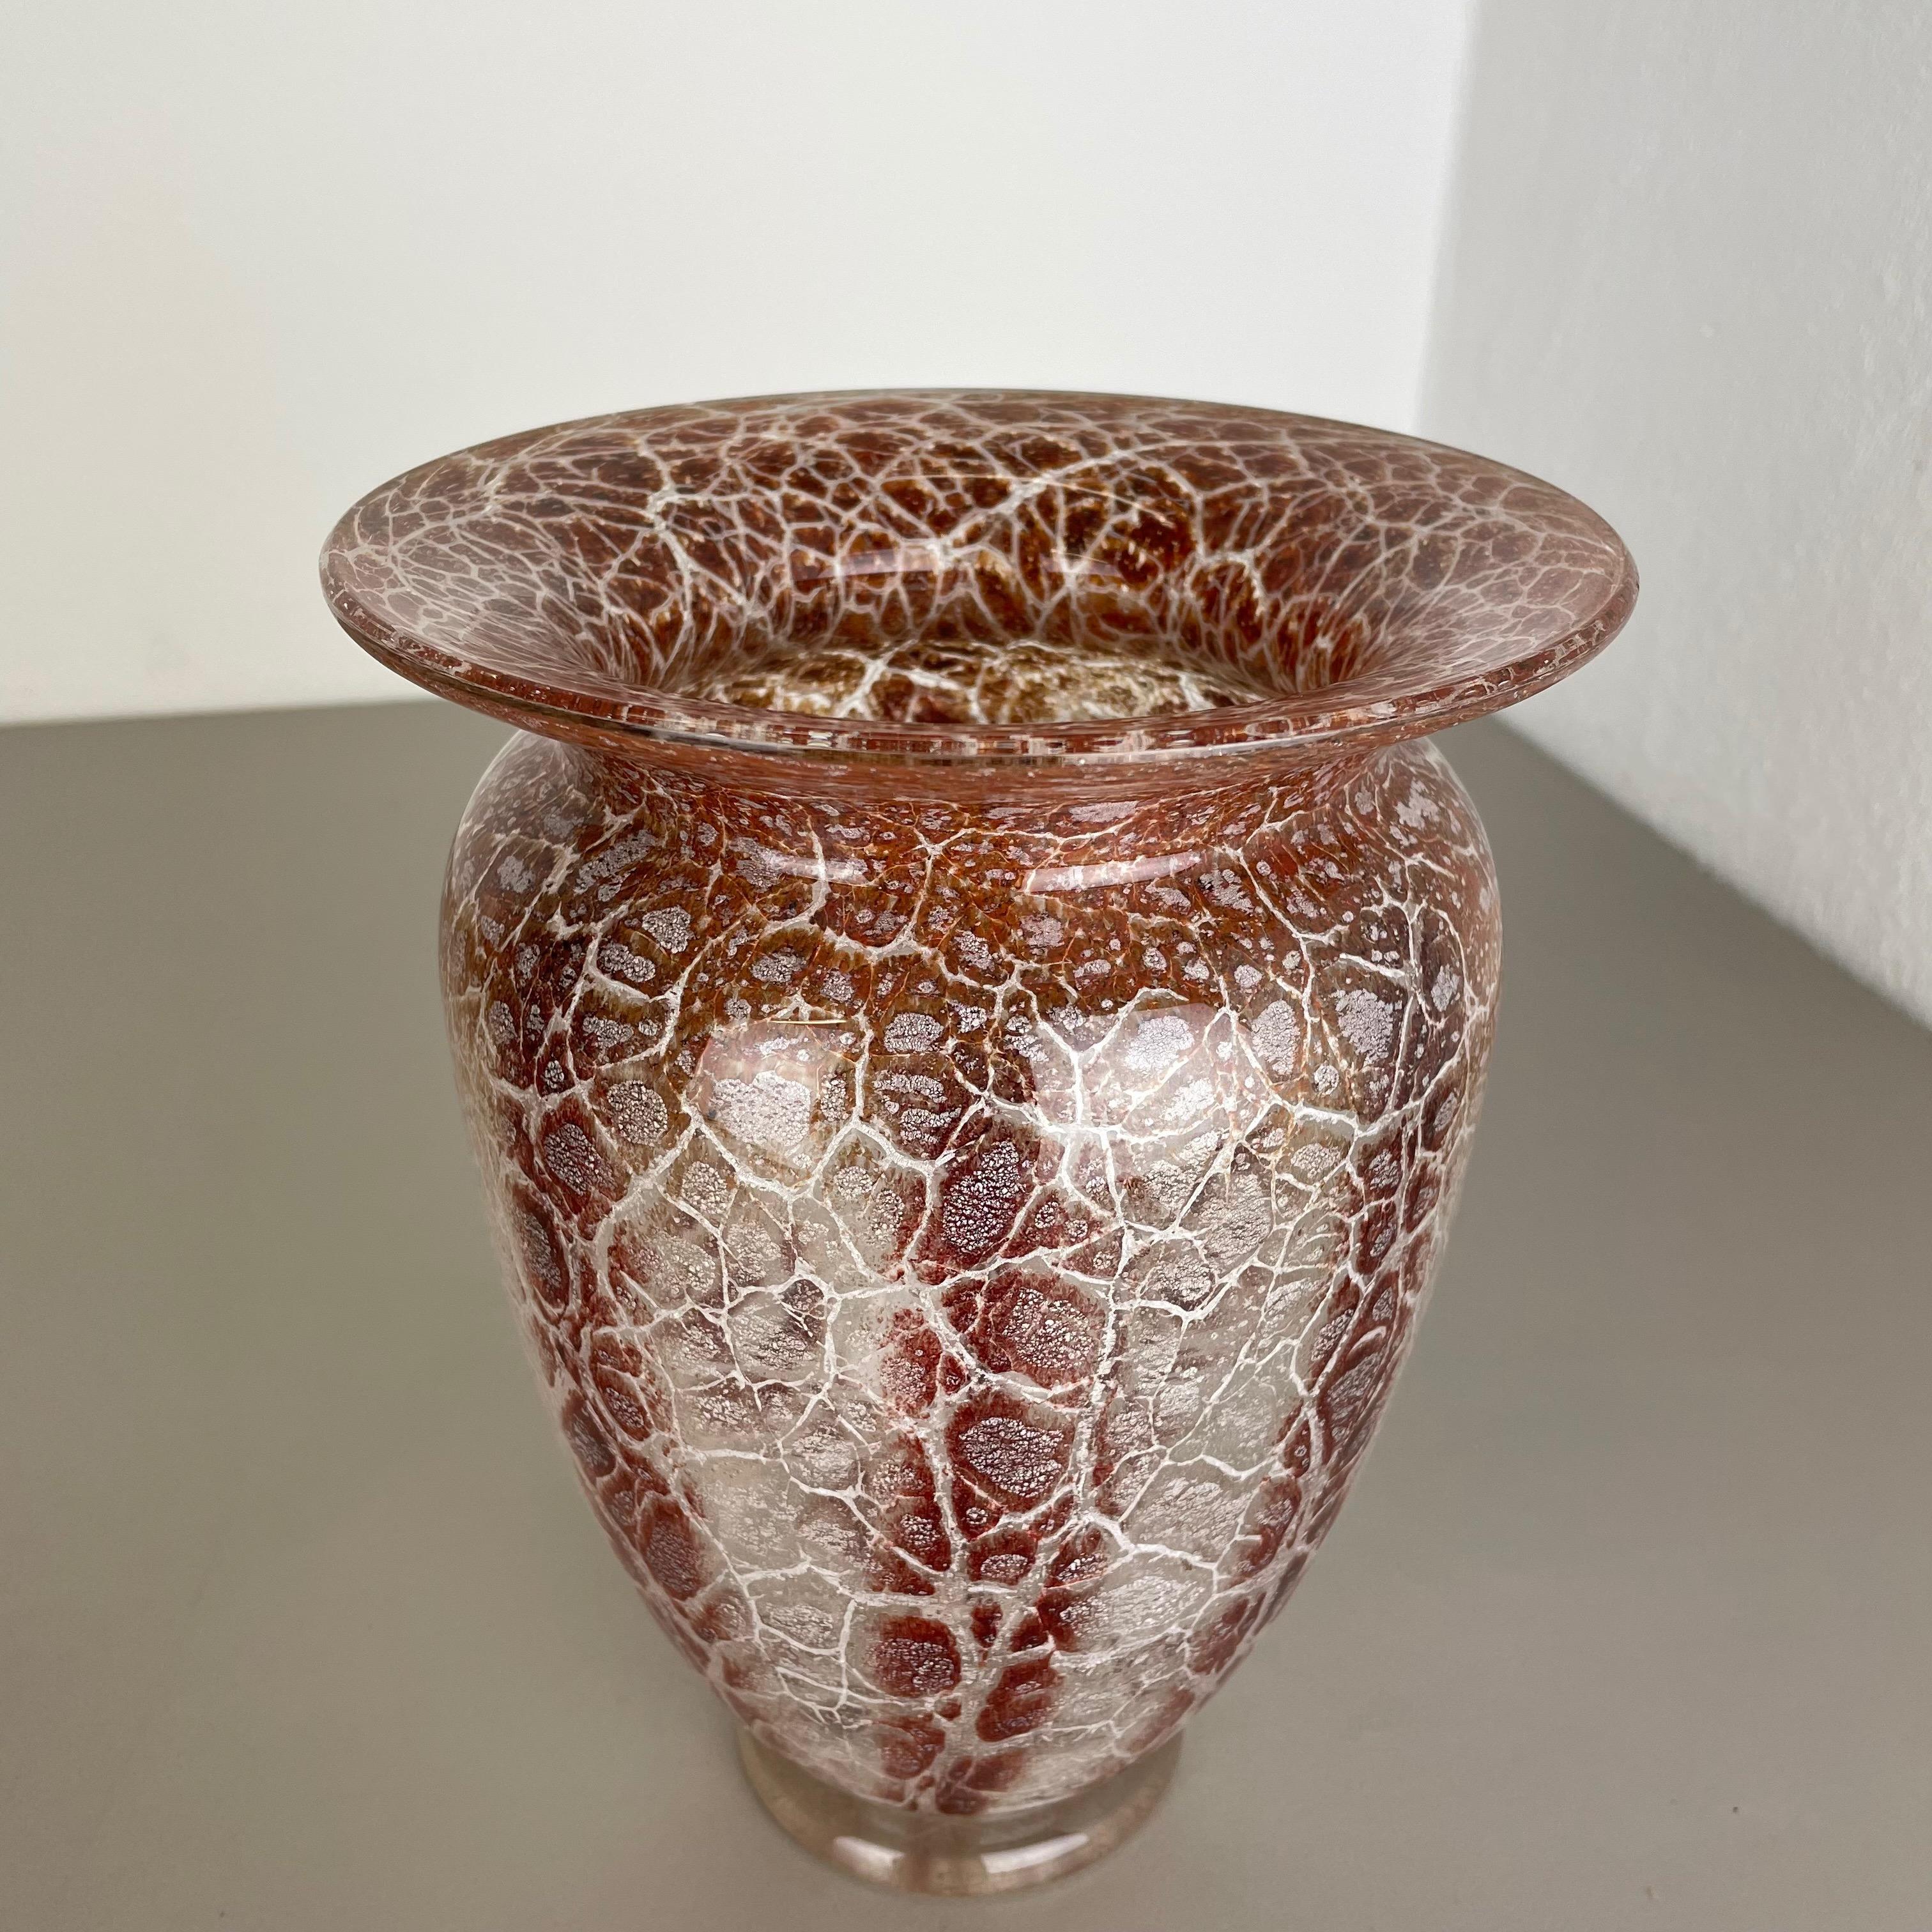 20th Century Ikora Glass Vase 2, 3kg by Karl Wiedmann for WMF Germany, 1930s Bauhaus Art Deco For Sale